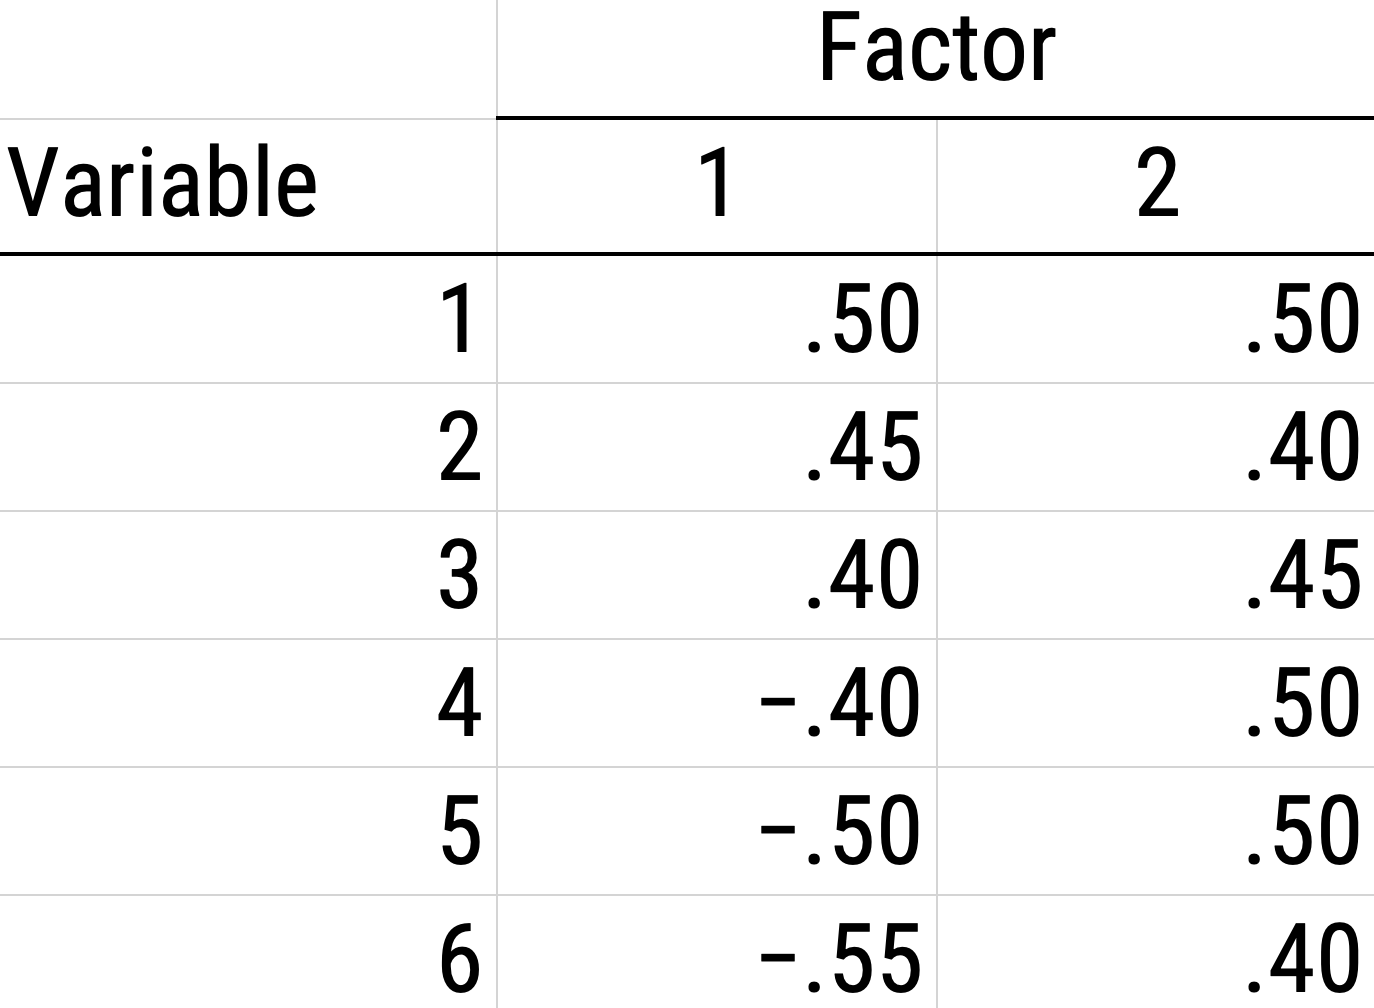 Example of a Factor Matrix.